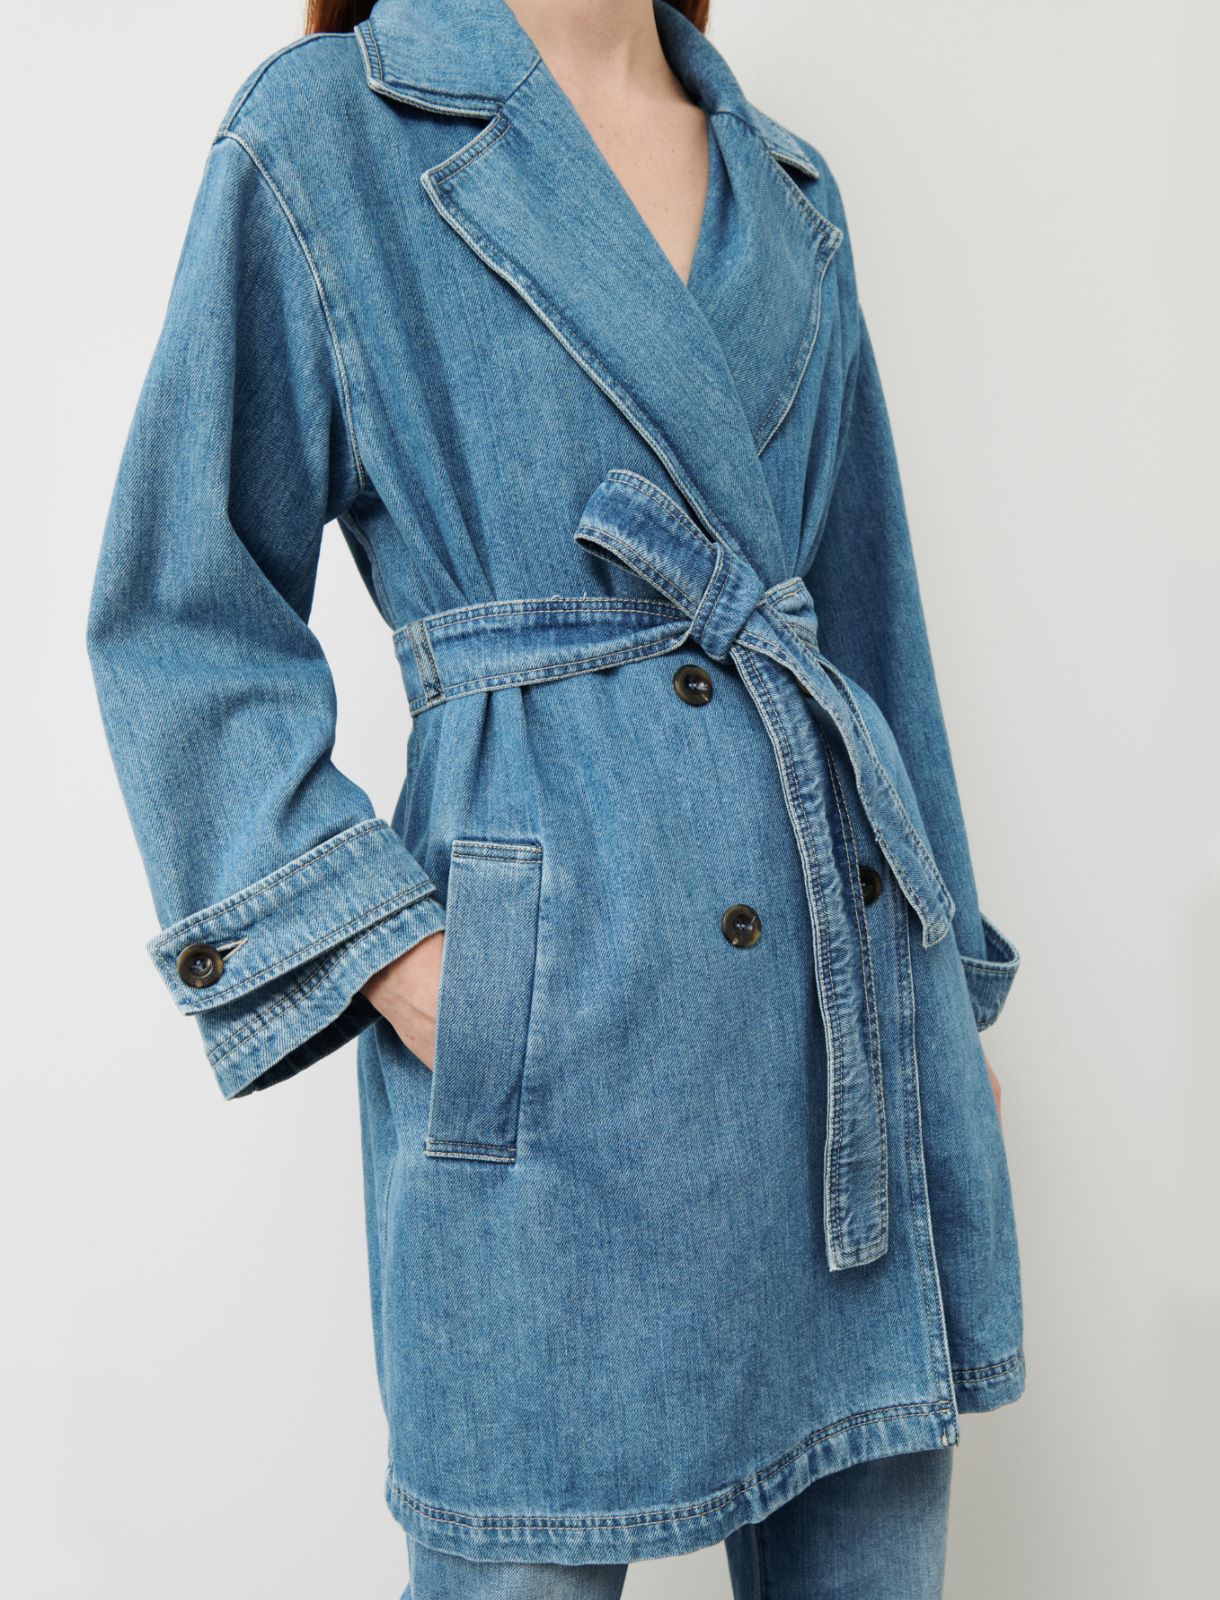 Denim trench coat - Blue jeans - Marina Rinaldi - 4